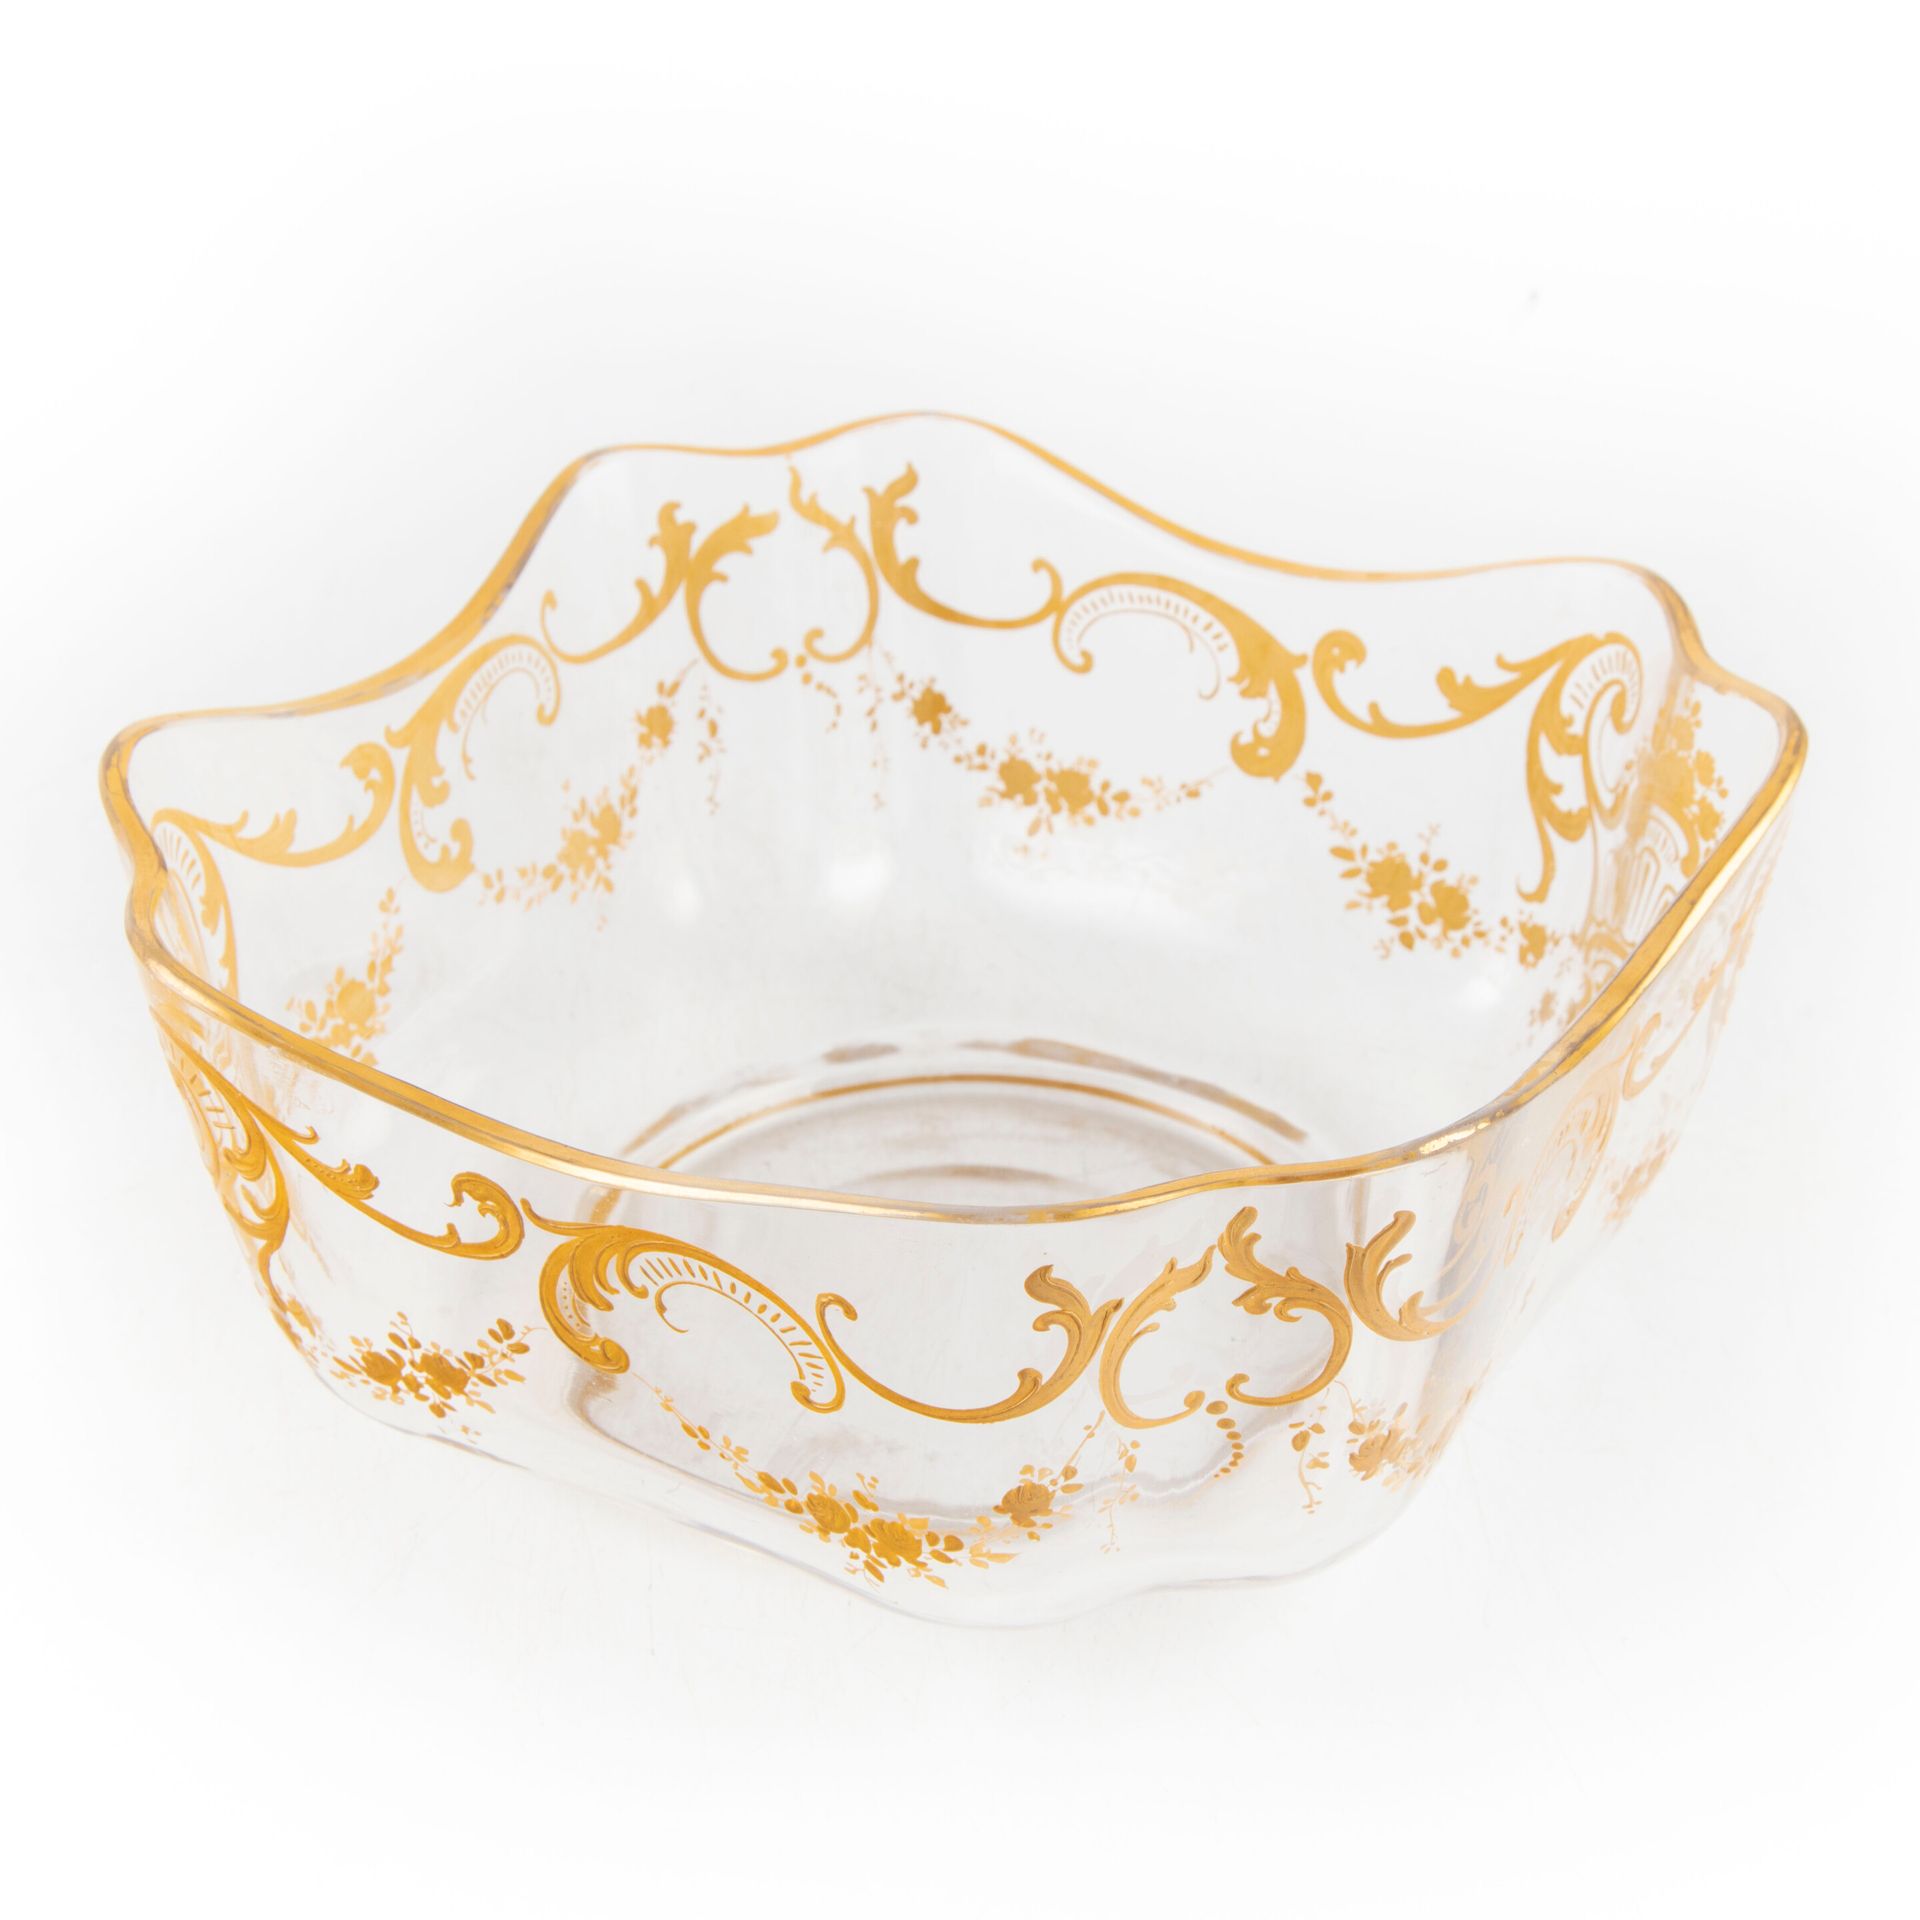 Null 18世纪风格的镀金珐琅装饰的水晶碗

H.9.5 cm; D. : 21 cm